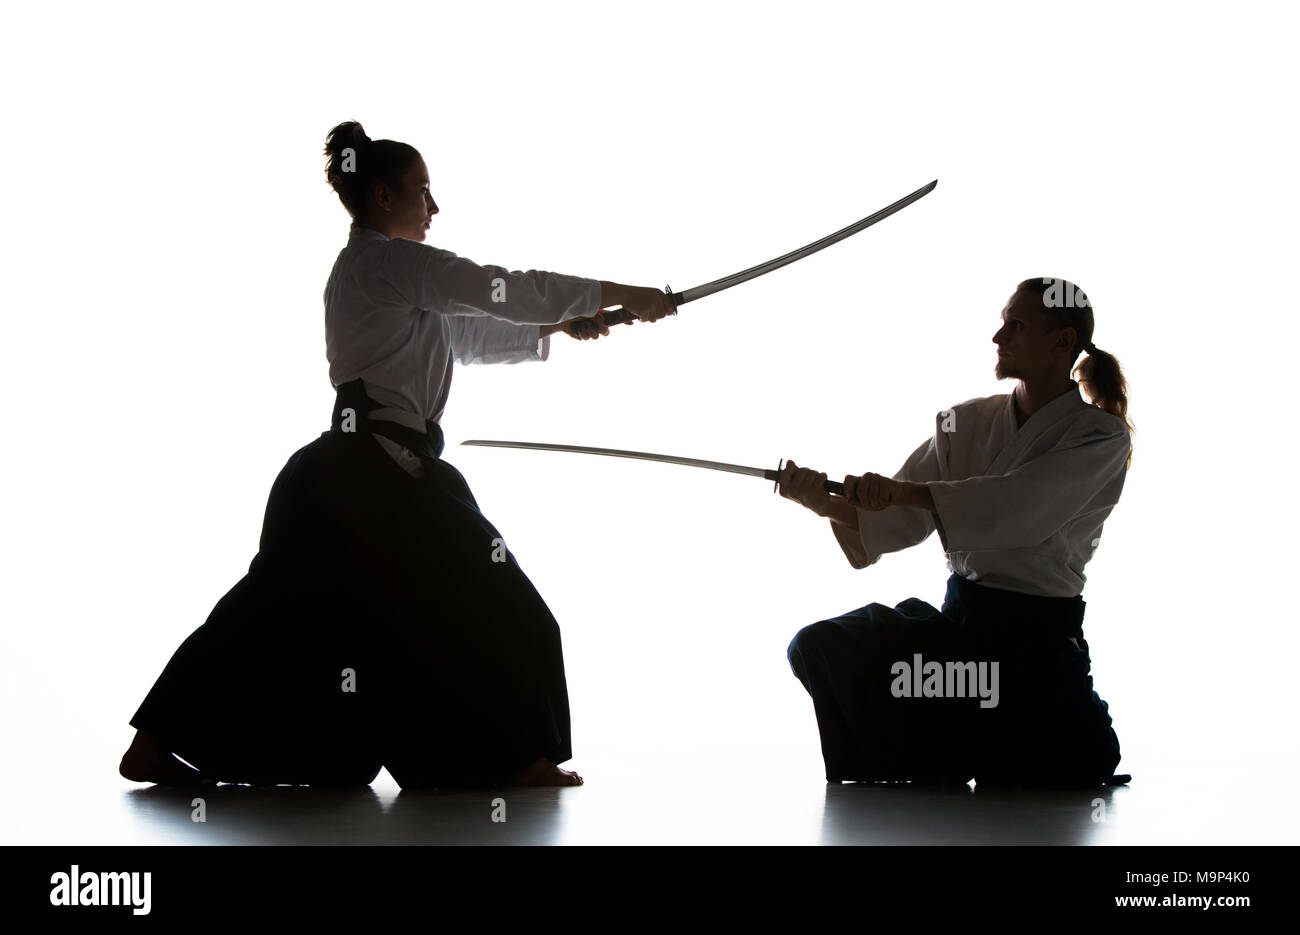 https://c8.alamy.com/comp/M9P4K0/man-and-woman-fighting-and-training-aikido-on-white-studio-background-M9P4K0.jpg